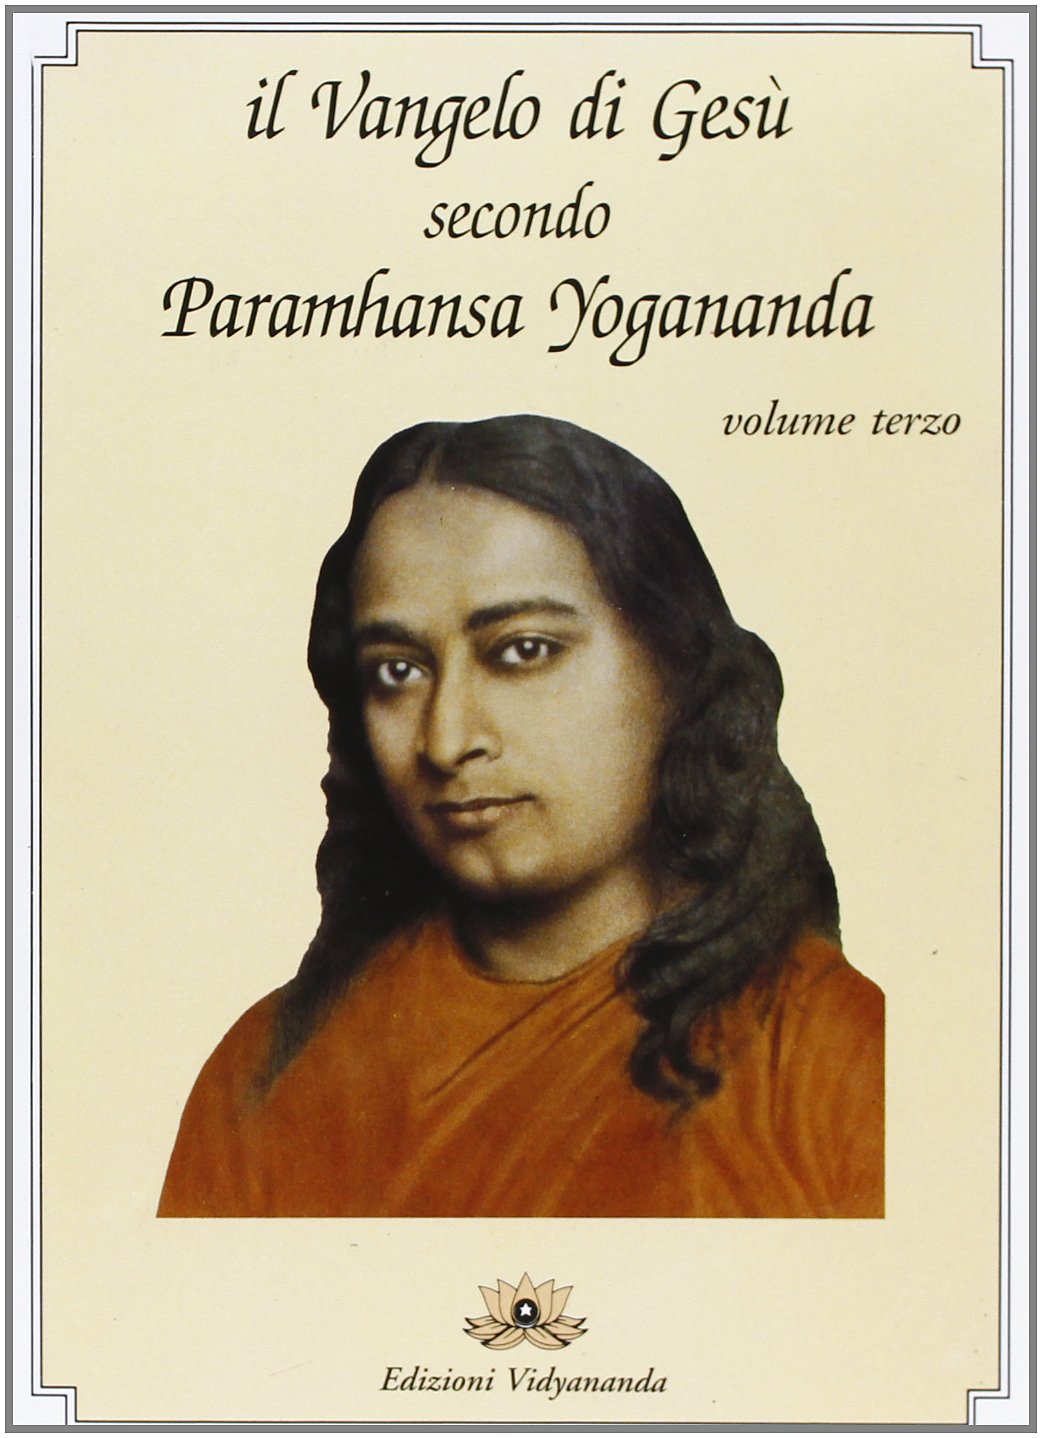 Il Vangelo di Gesù. Vol 3 - Paramhansa Yogananda